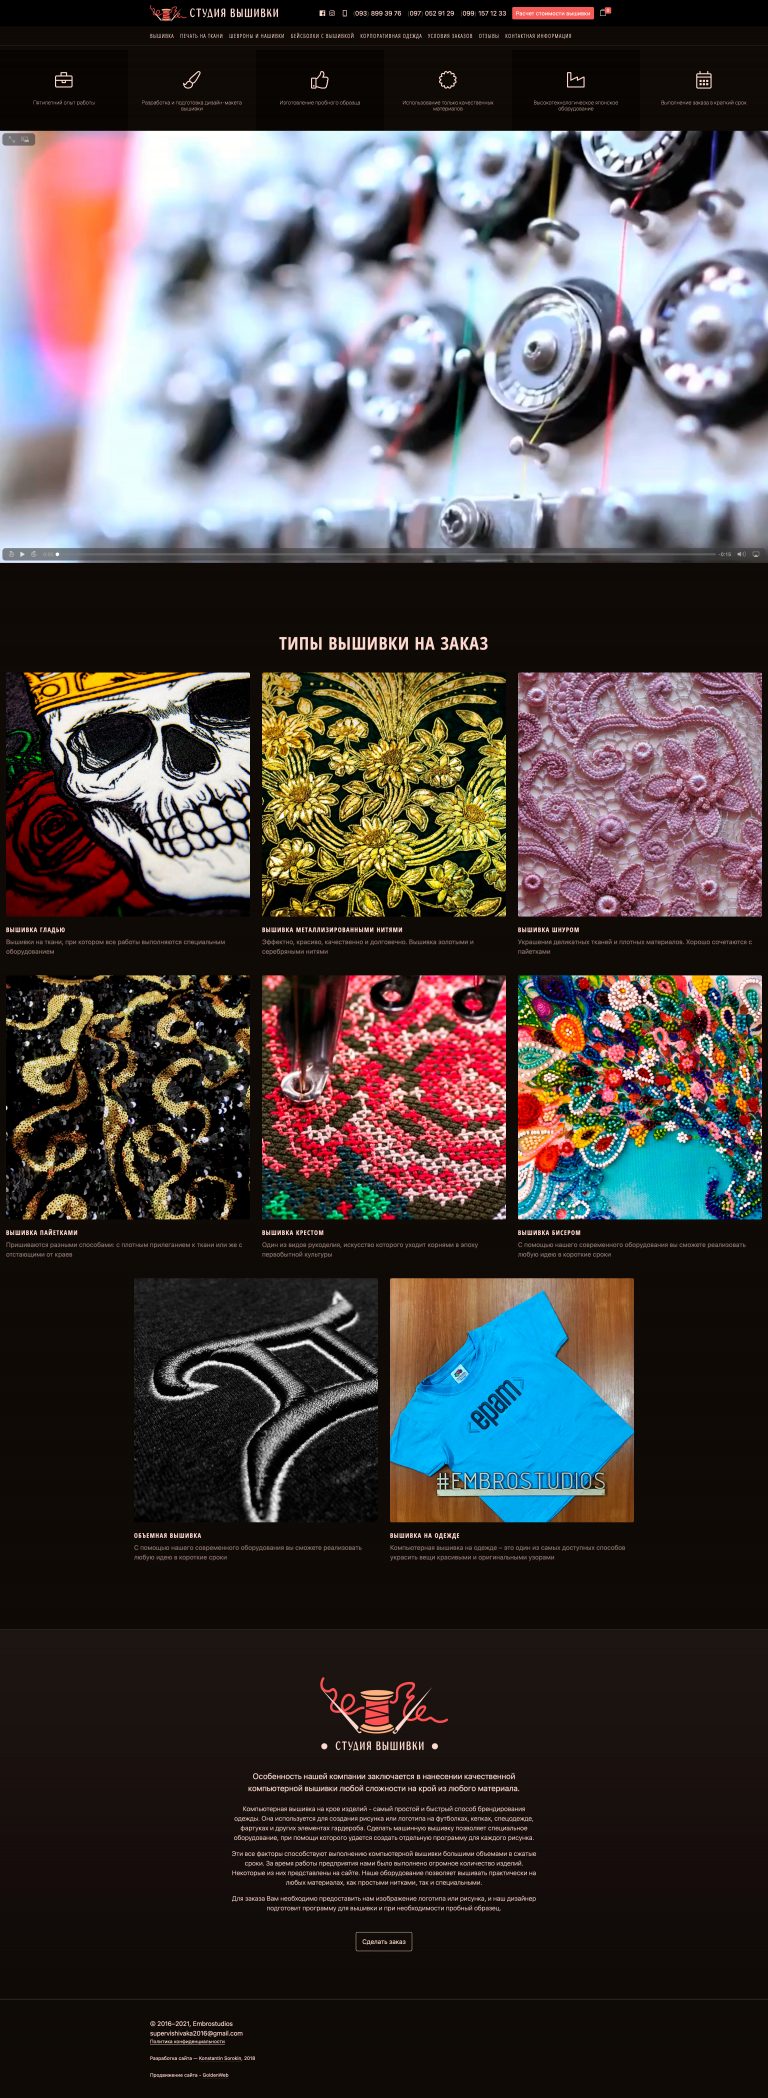 Embroidery Studio website